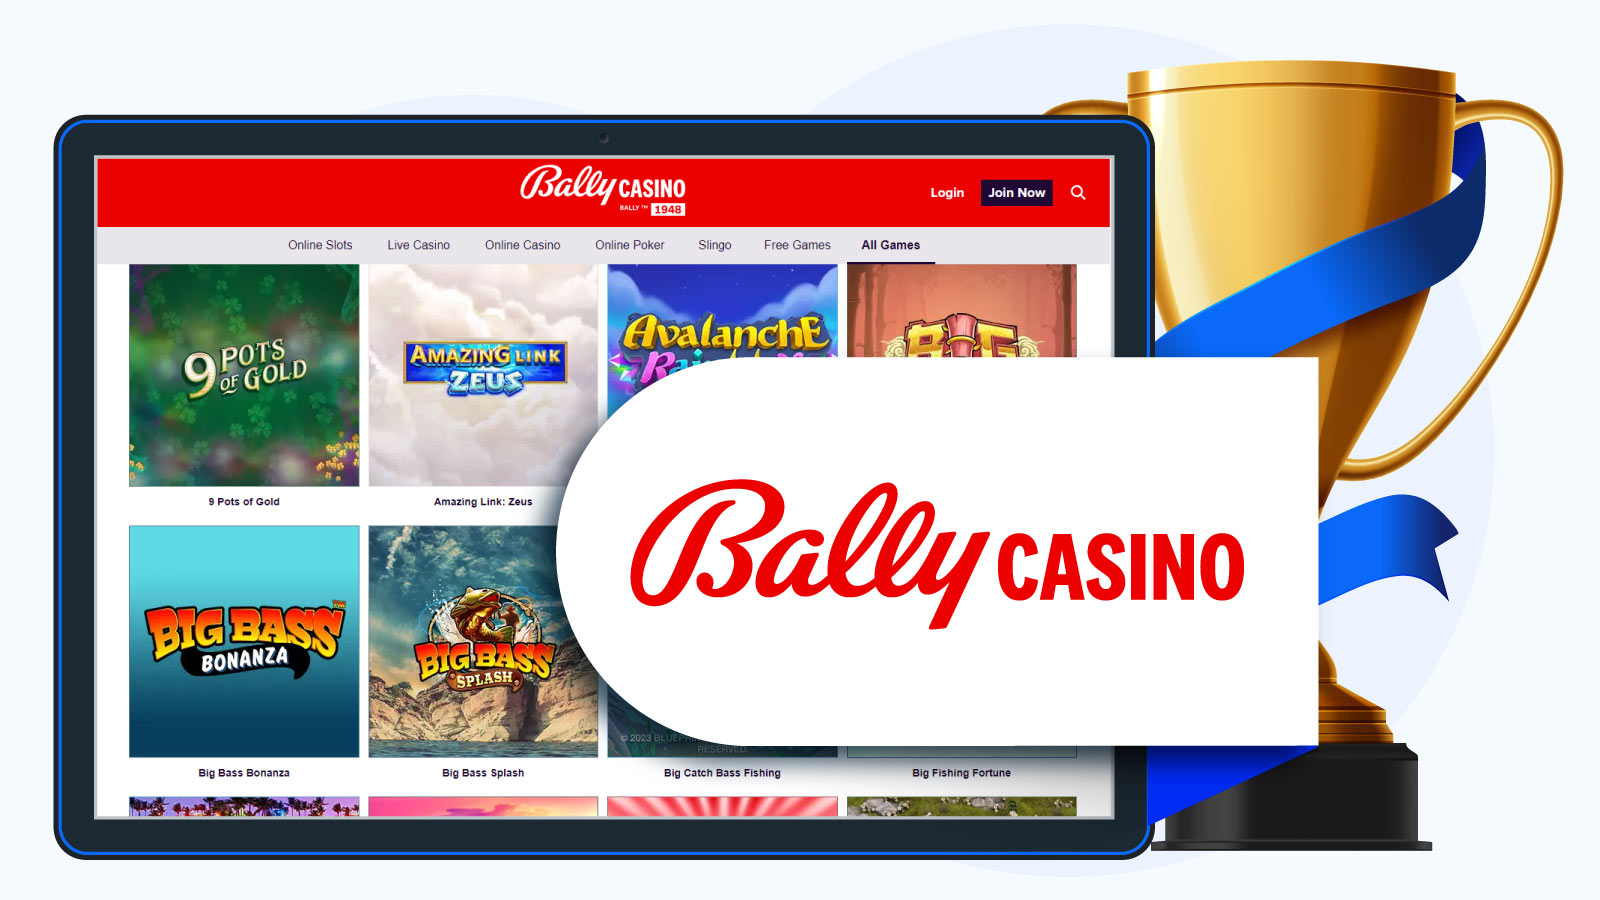 Bally Casino – Deposit £10 Get 30 Wager-Free Spins